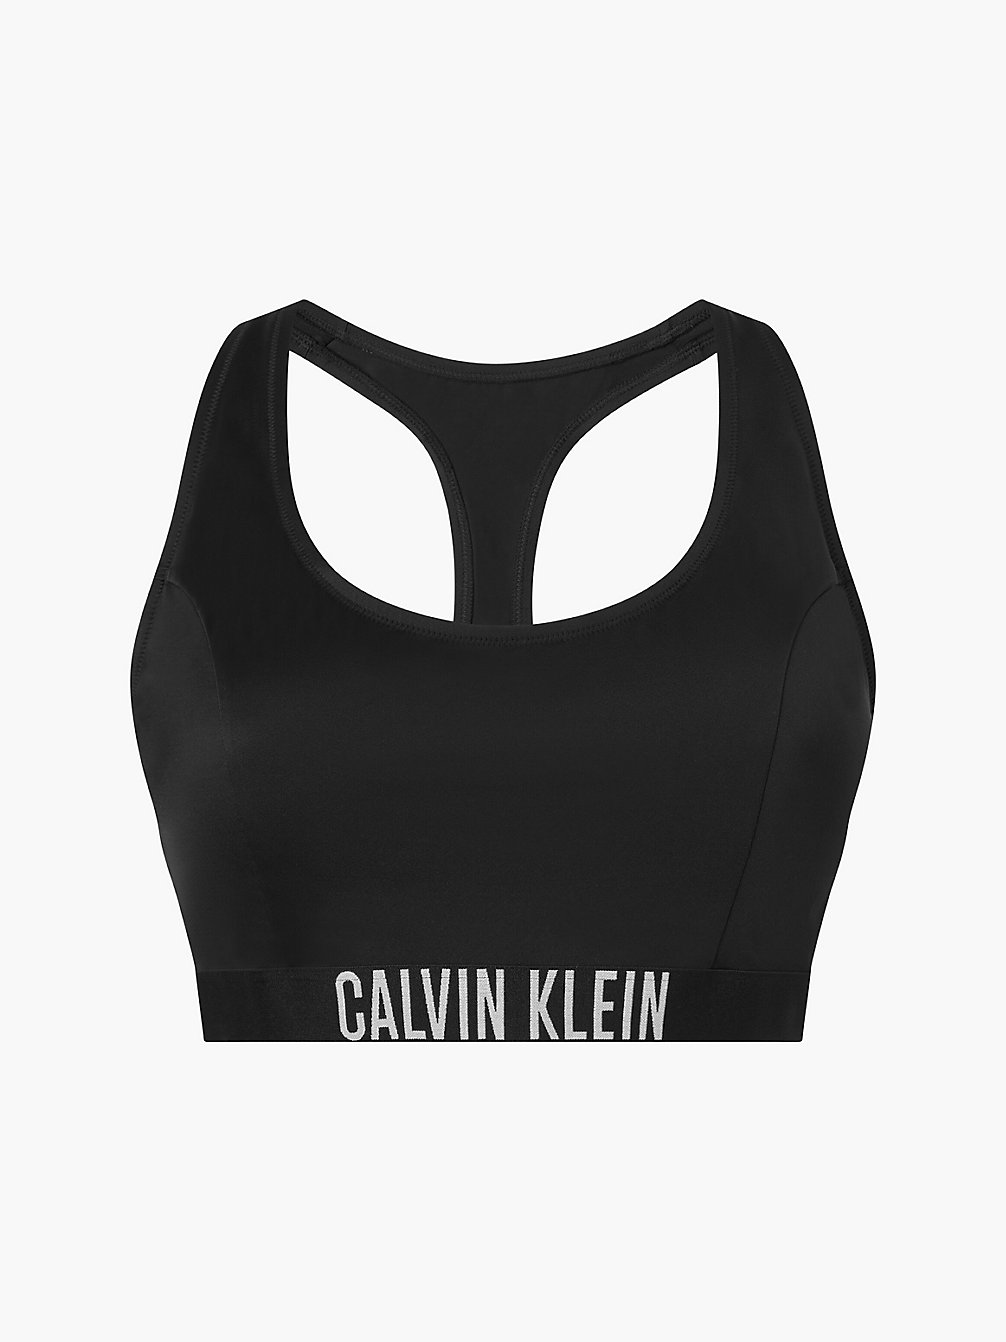 PVH BLACK Brassière De Bain Grande Taille - Intense Power undefined femmes Calvin Klein